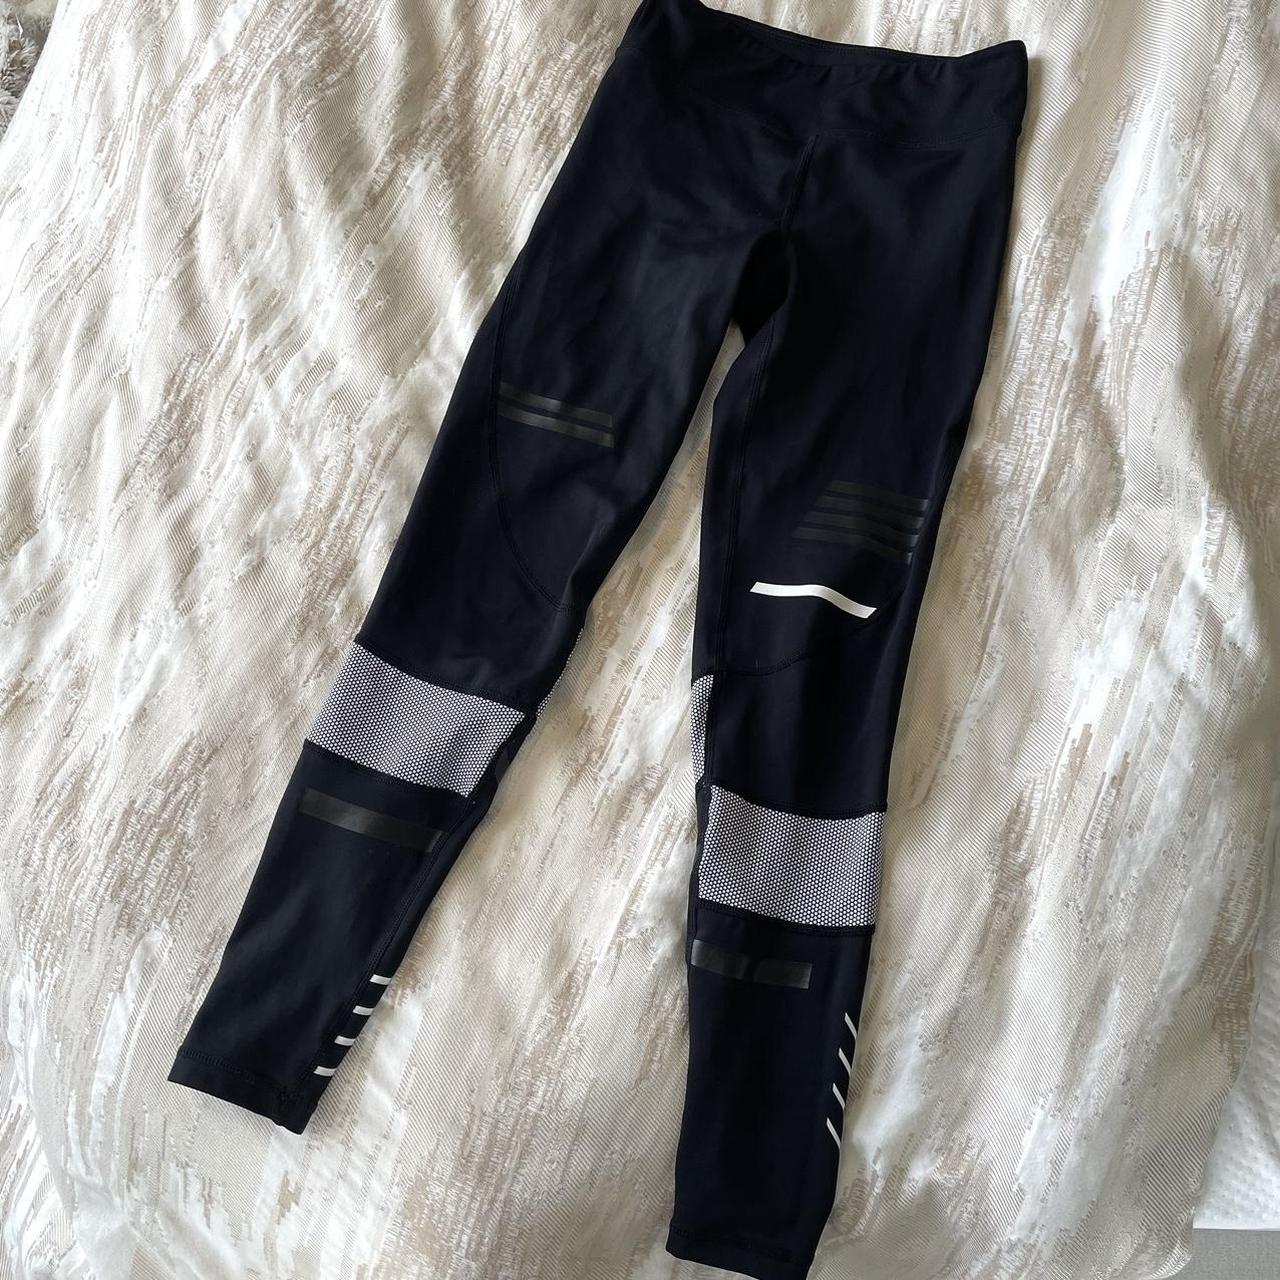 Lilybod activewear leggings, Pants & Jeans